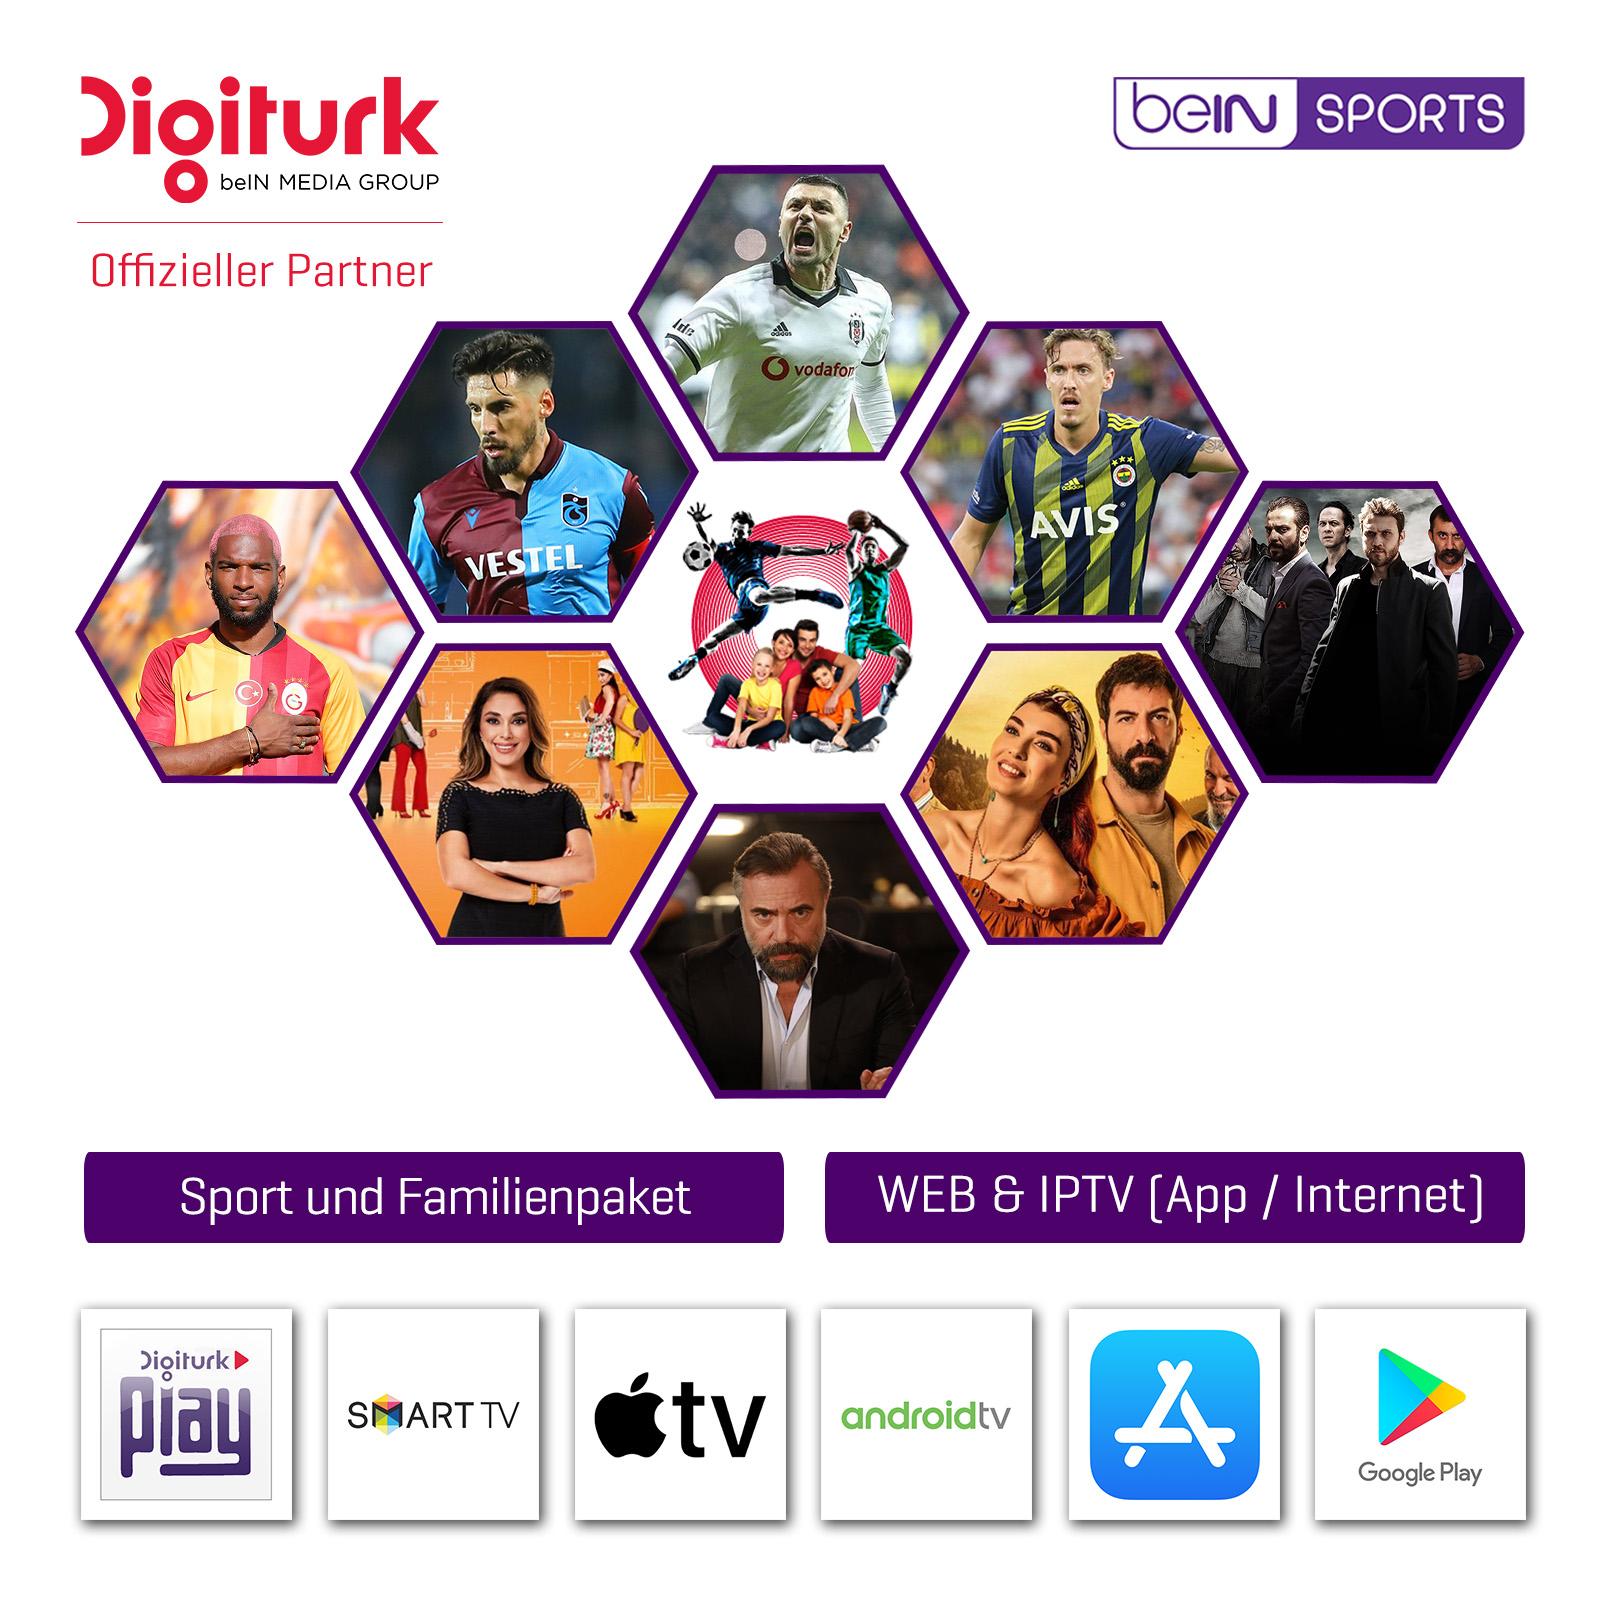 Digitürk Play beIN Sports WEB IPTV HD Sport and Familienpaket Monatlich 19.90€ 12 Monate Abo Satfreax